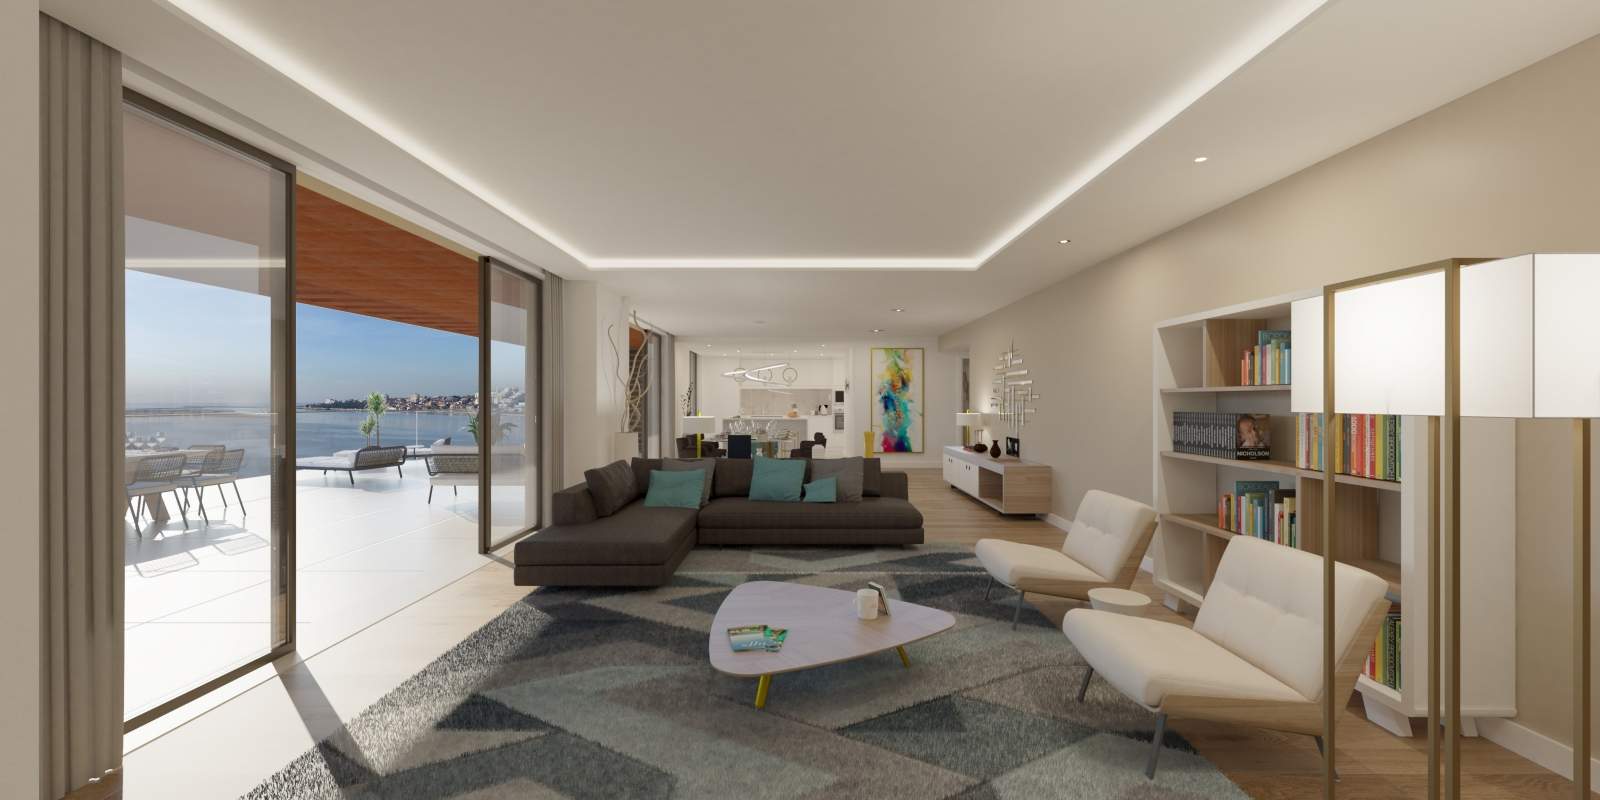 Apartment for sale with terrace, in exclusive condominium, V. N. Gaia, Porto, Portugal_175469